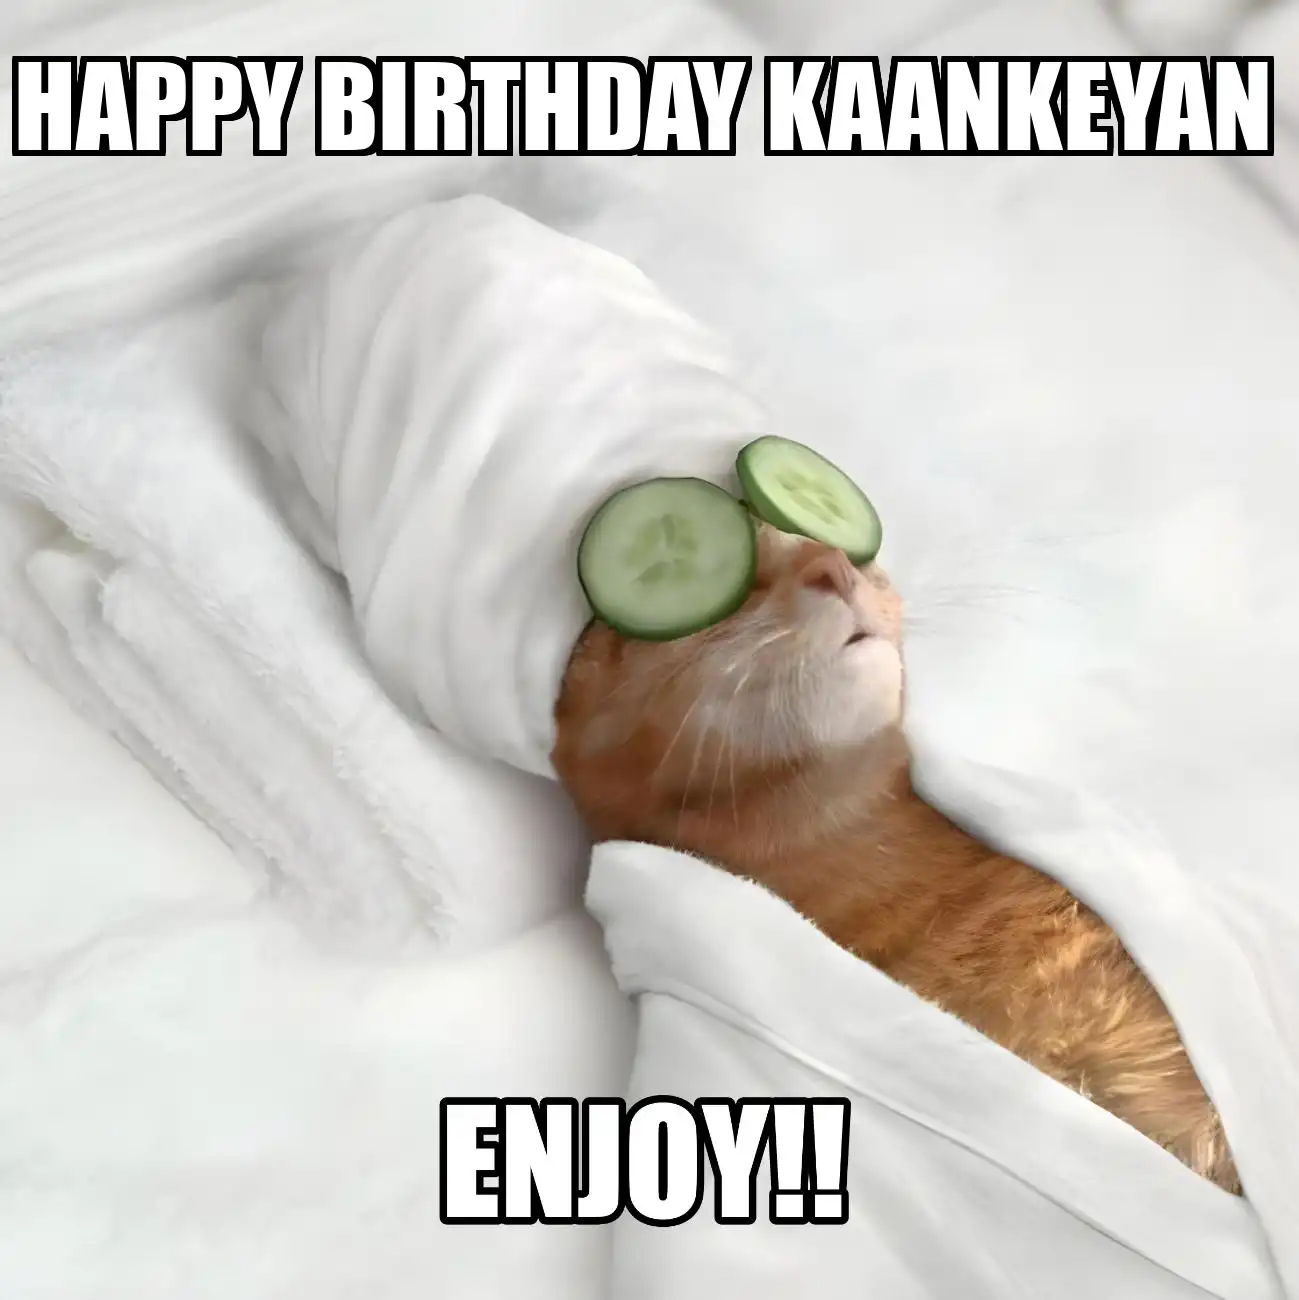 Happy Birthday Kaankeyan Enjoy Cat Meme